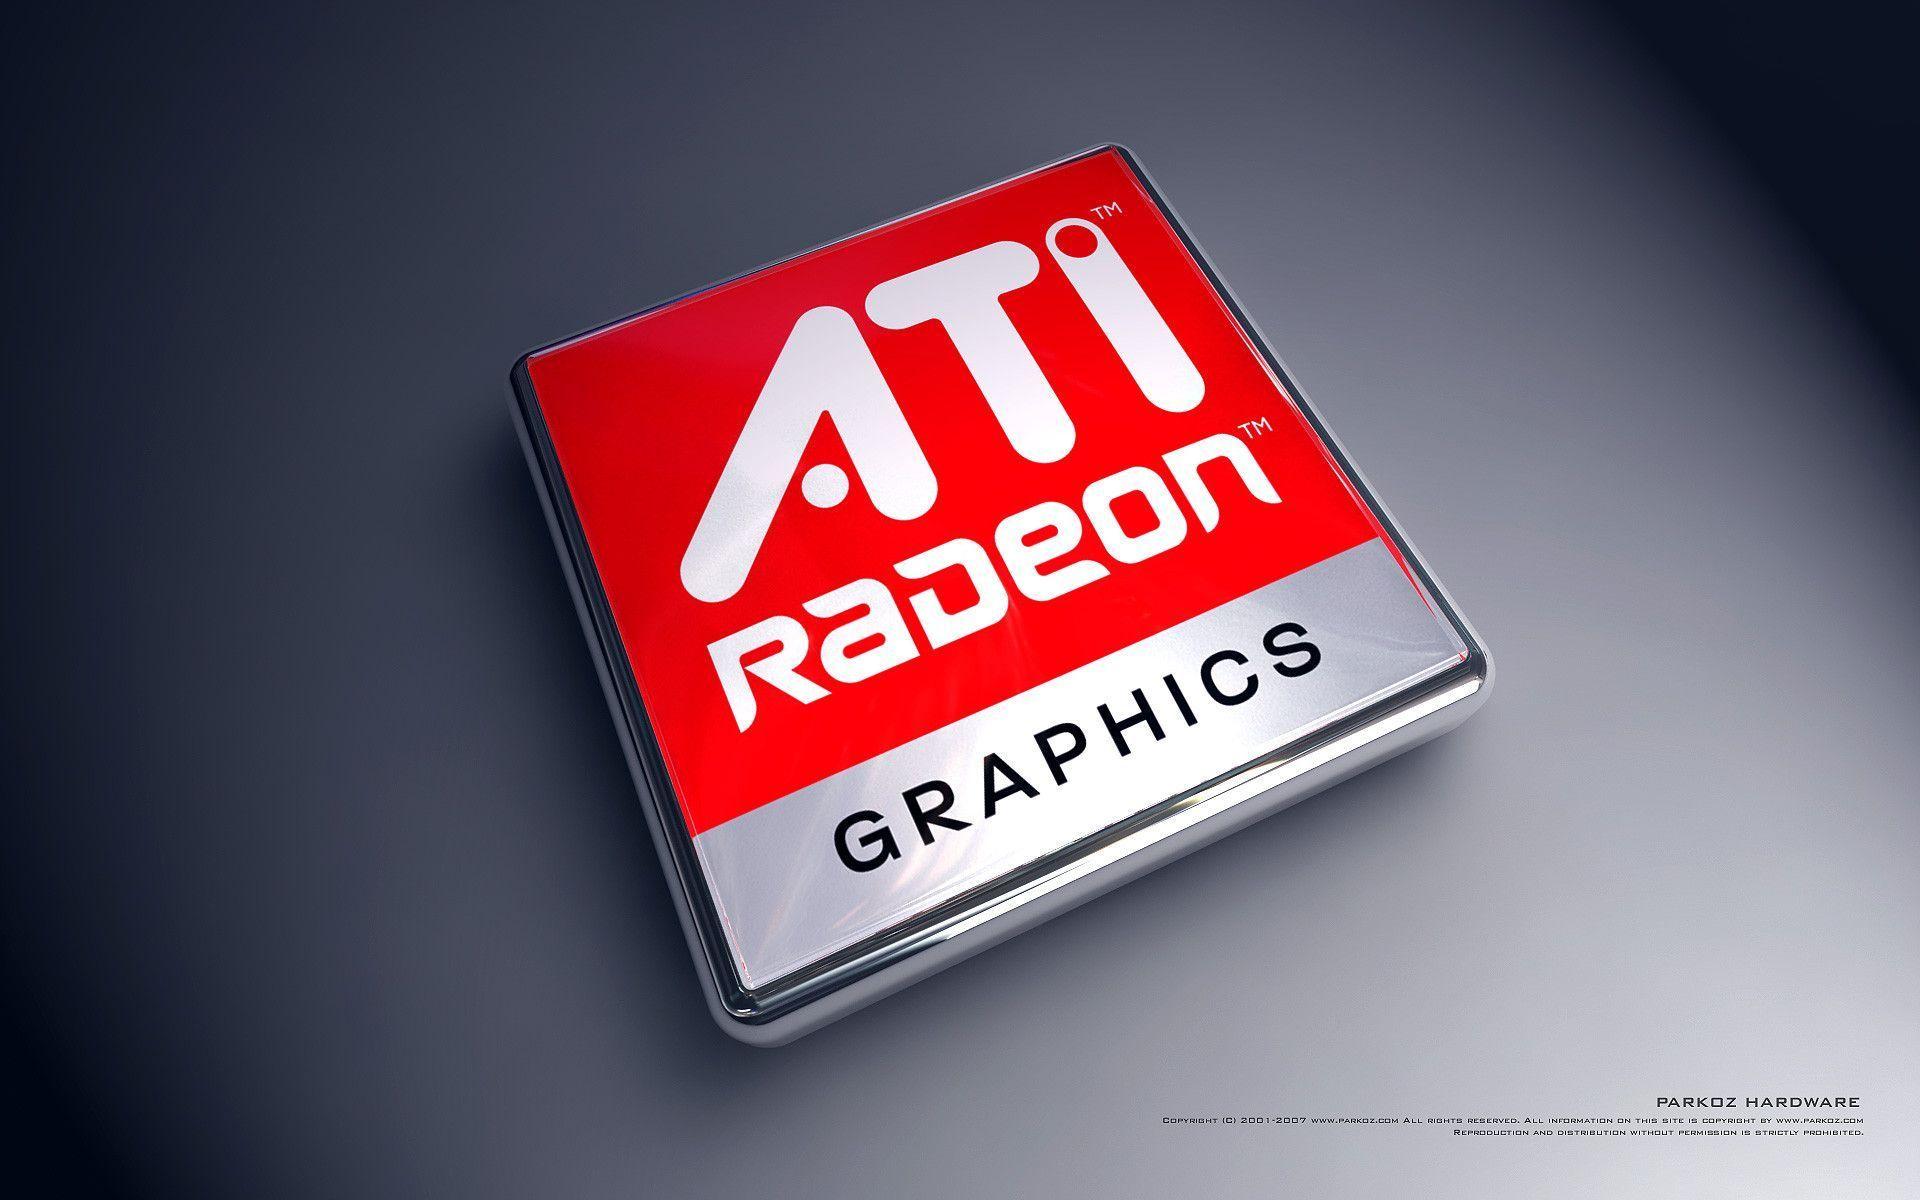 Ati Radeon wallpaper